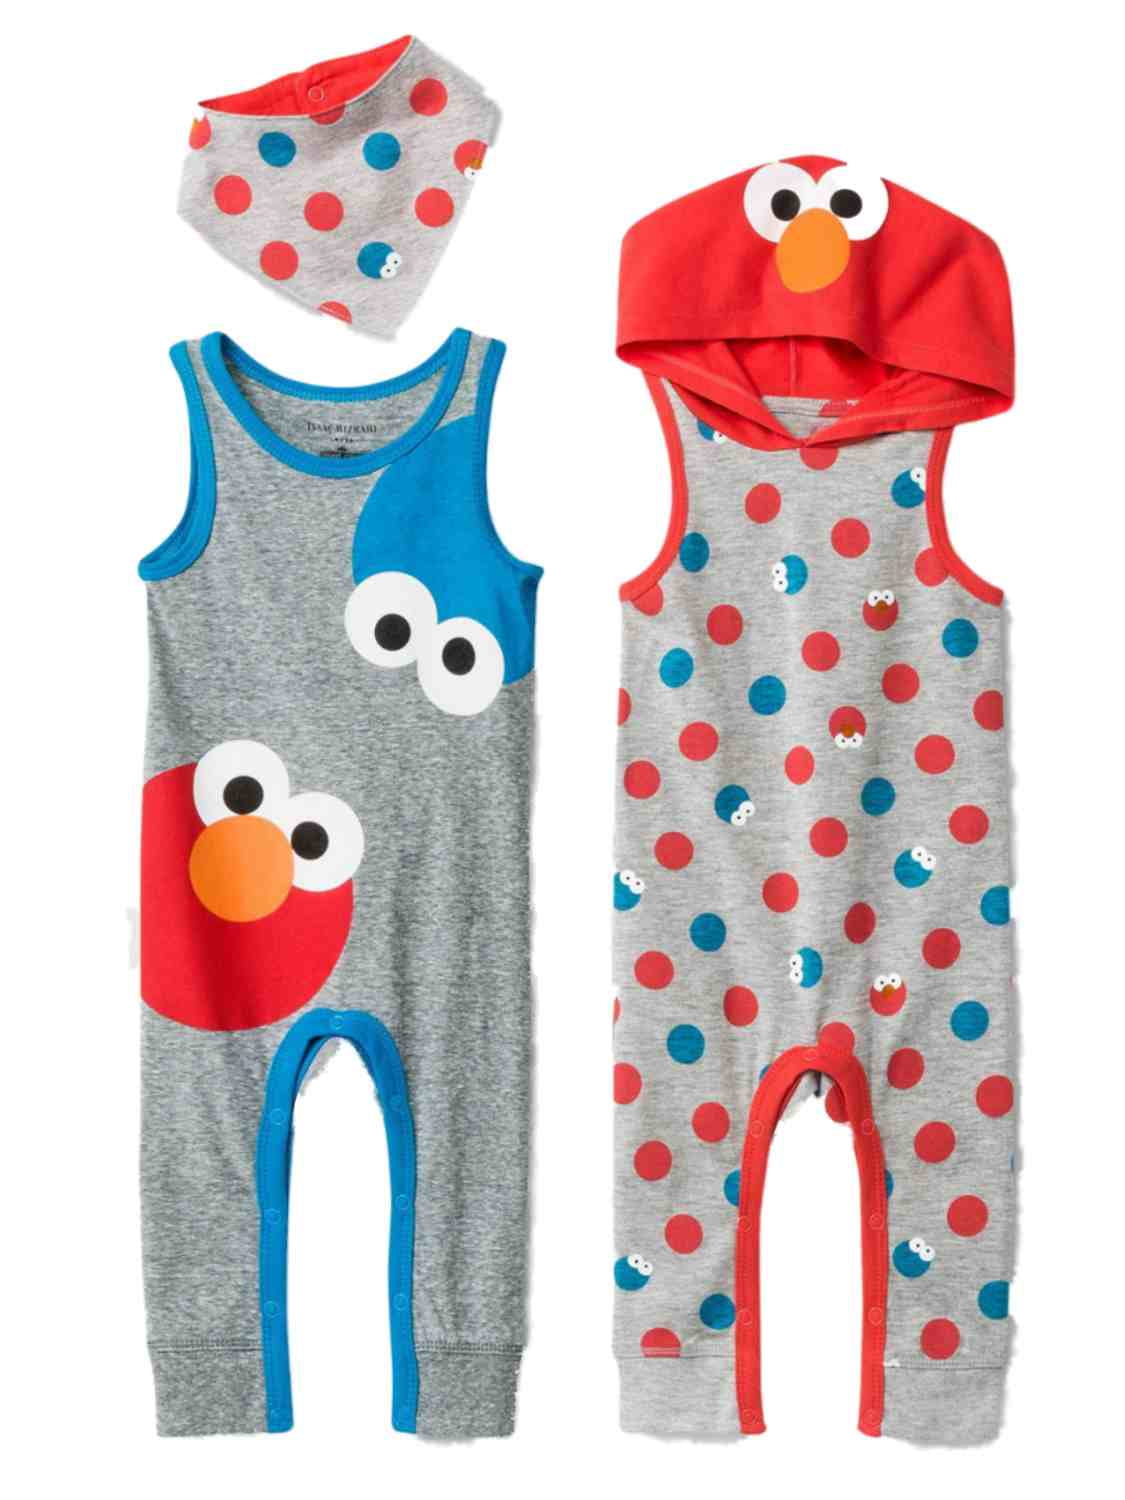 Toddler Boys Jumper Shorts ELMO Sesame Street RED STRIPE 0-3 Months CUTE 